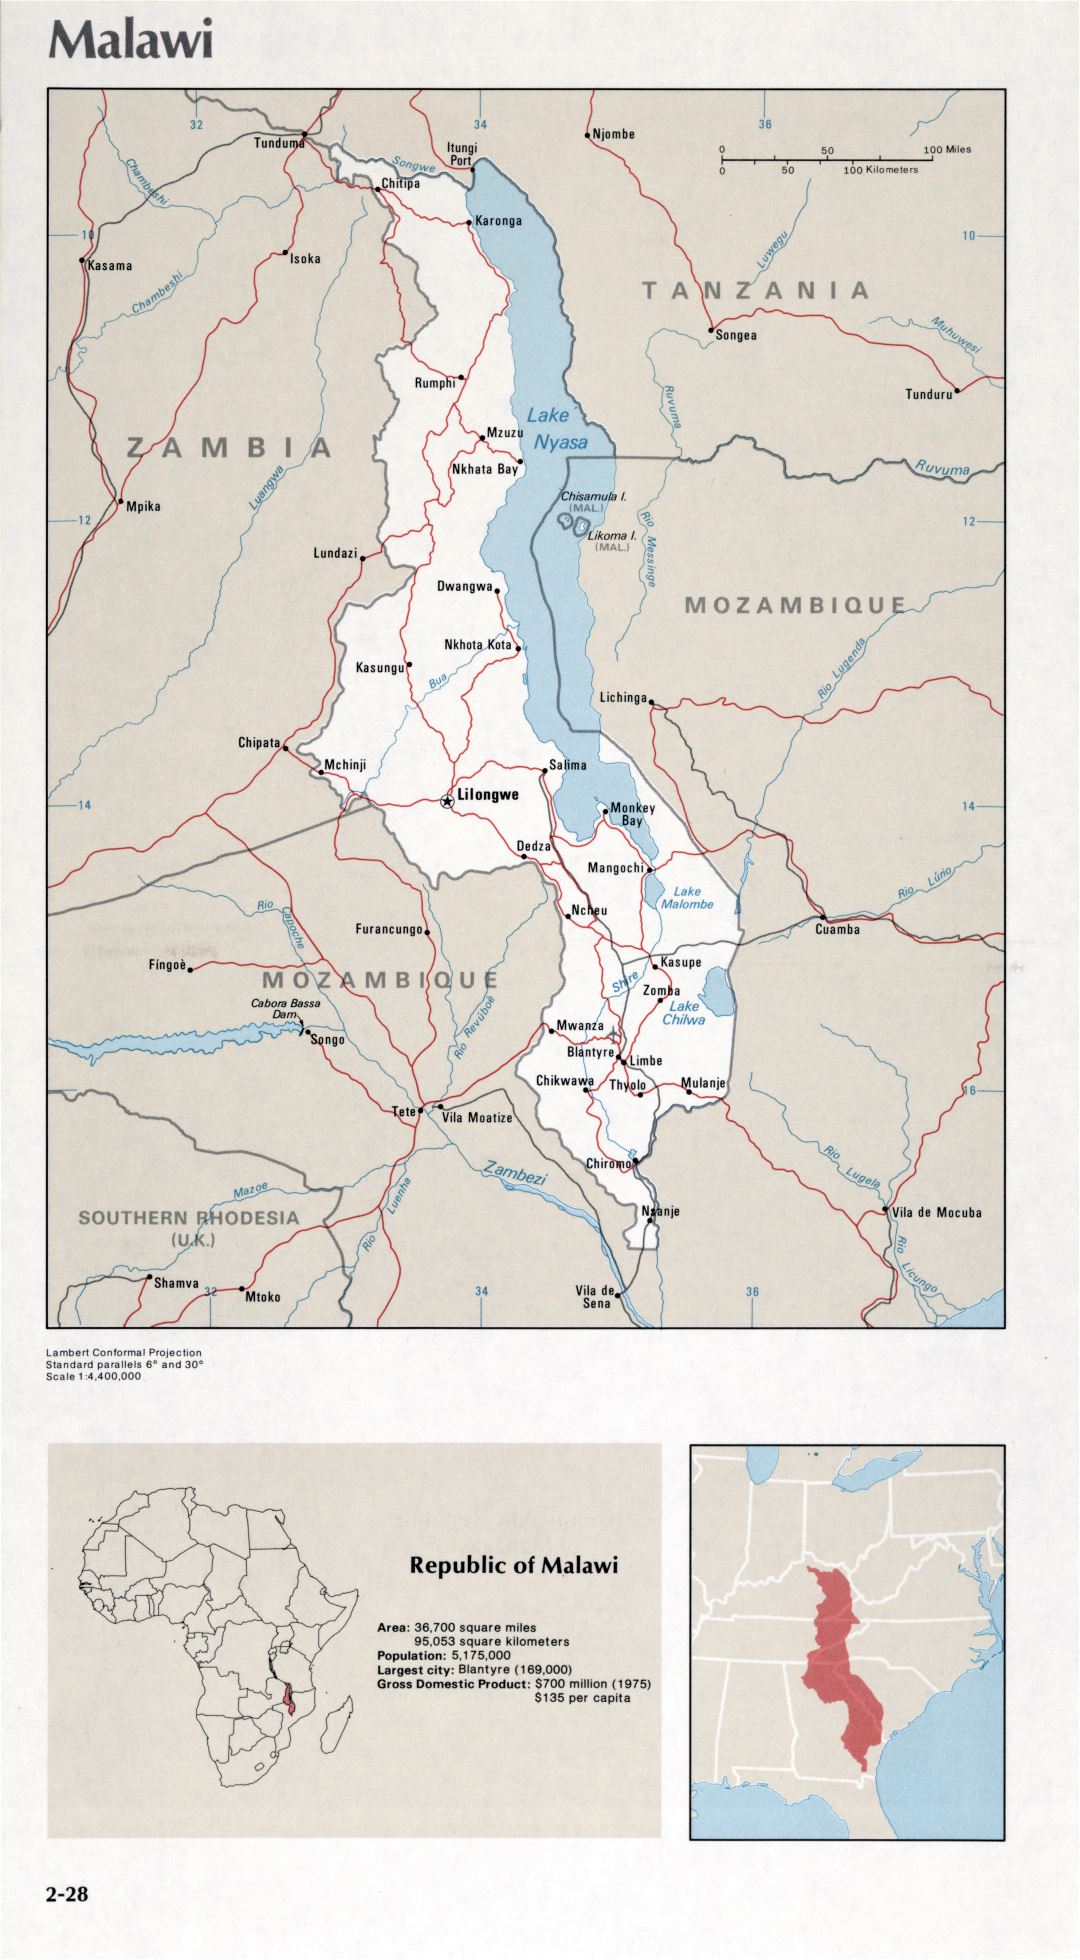 Map of Malawi (2-28)